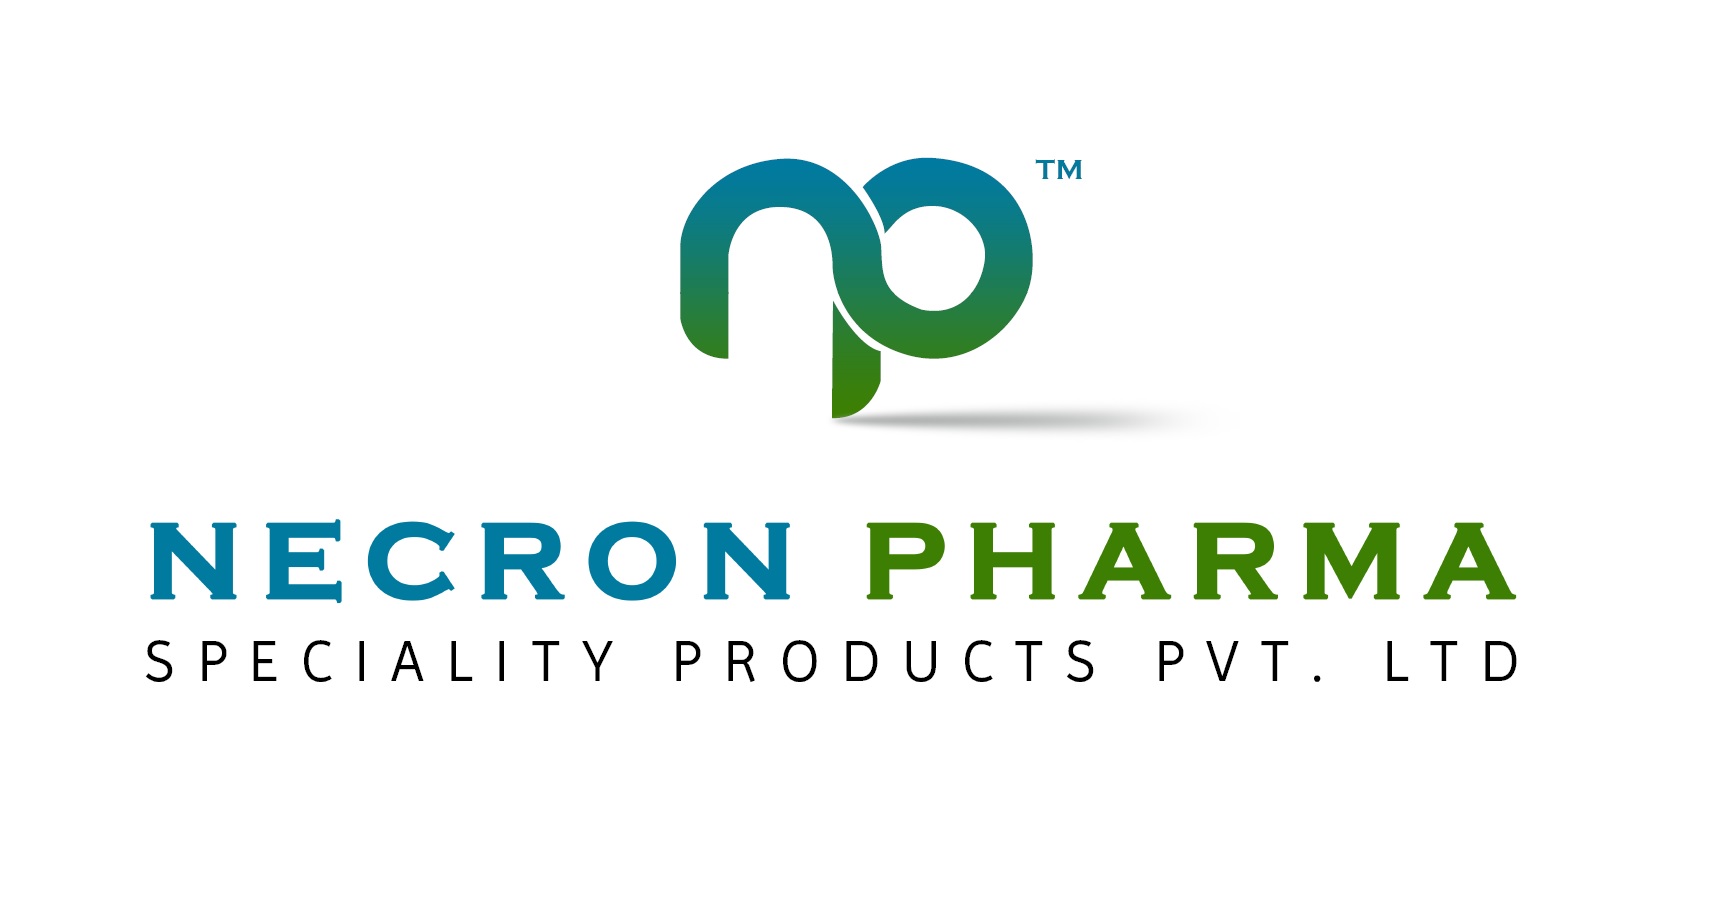 Necron Pharma Speciality Products Pvt Ltd